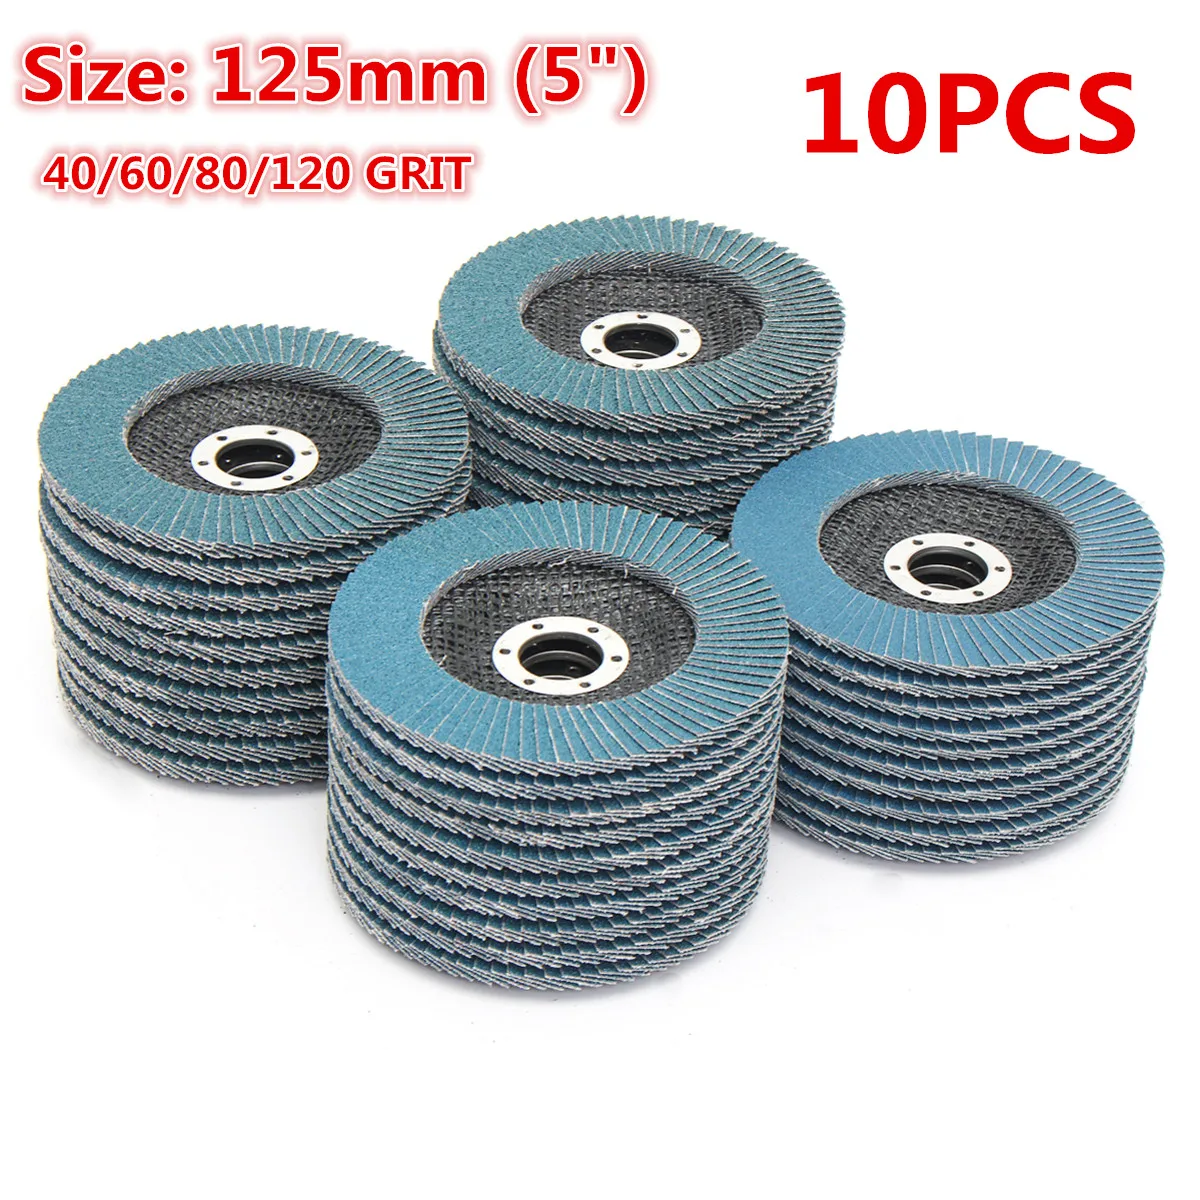 

10Pcs Grinding Wheels Flap Discs 125mm 40/60/80/120 Grit Angle Grinder Sanding Discs Metal Plastic Wood Abrasive Tool A65